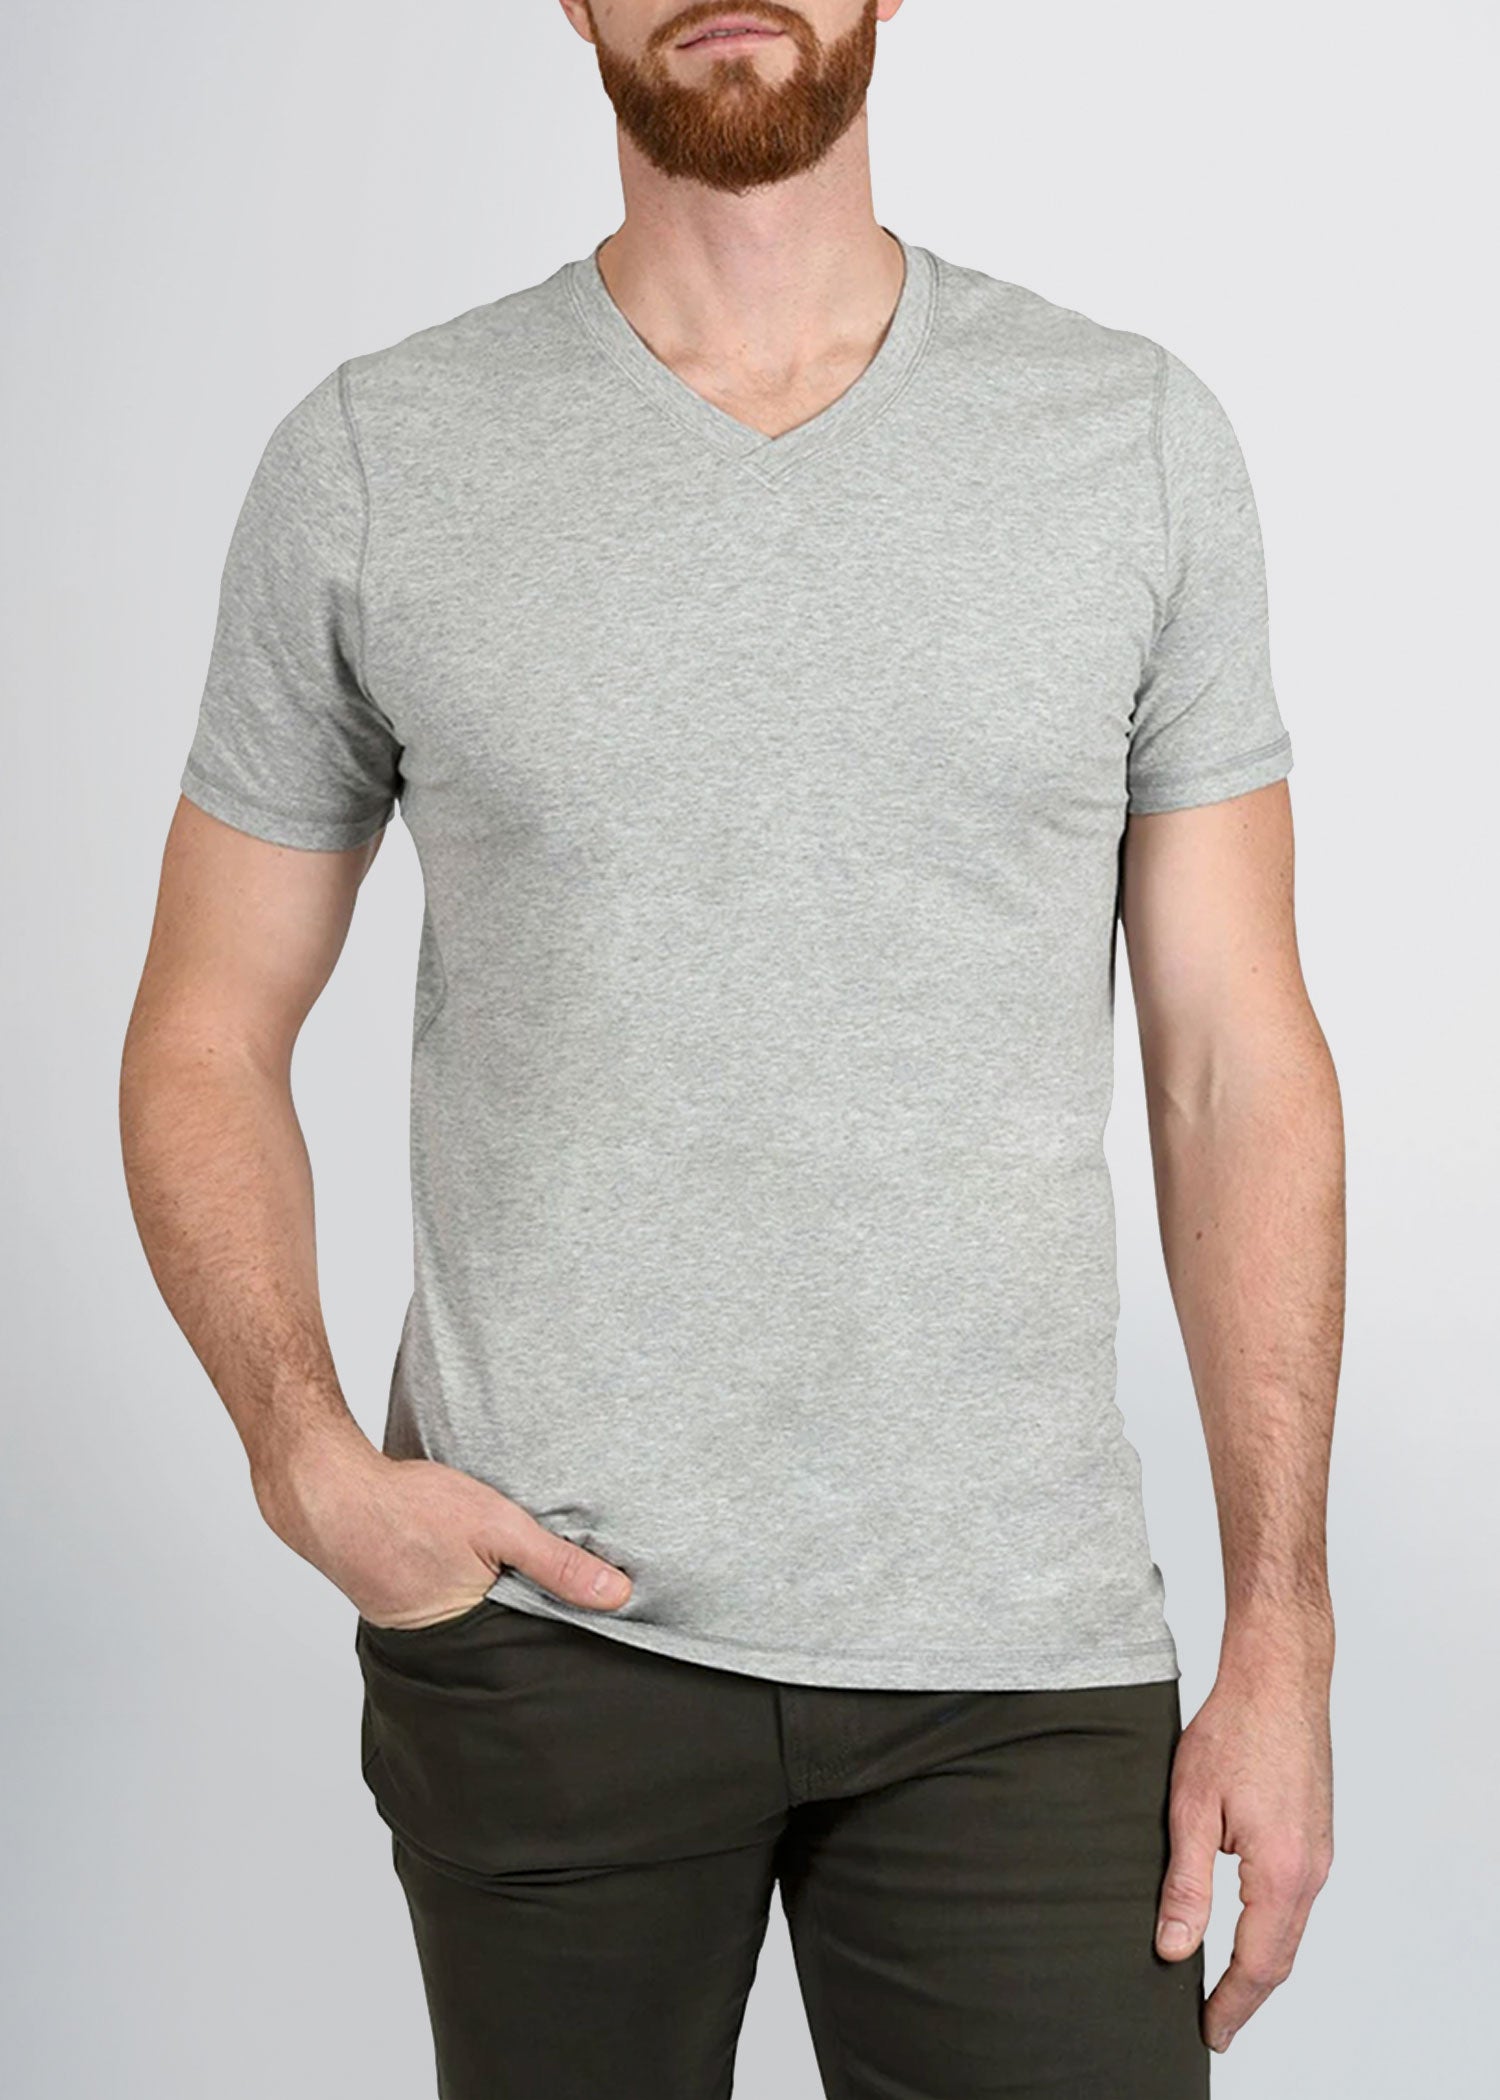 Cotton Men's Short Sleeve Deep V Neck T Shirt Slim Fit Clubwear Office Tops